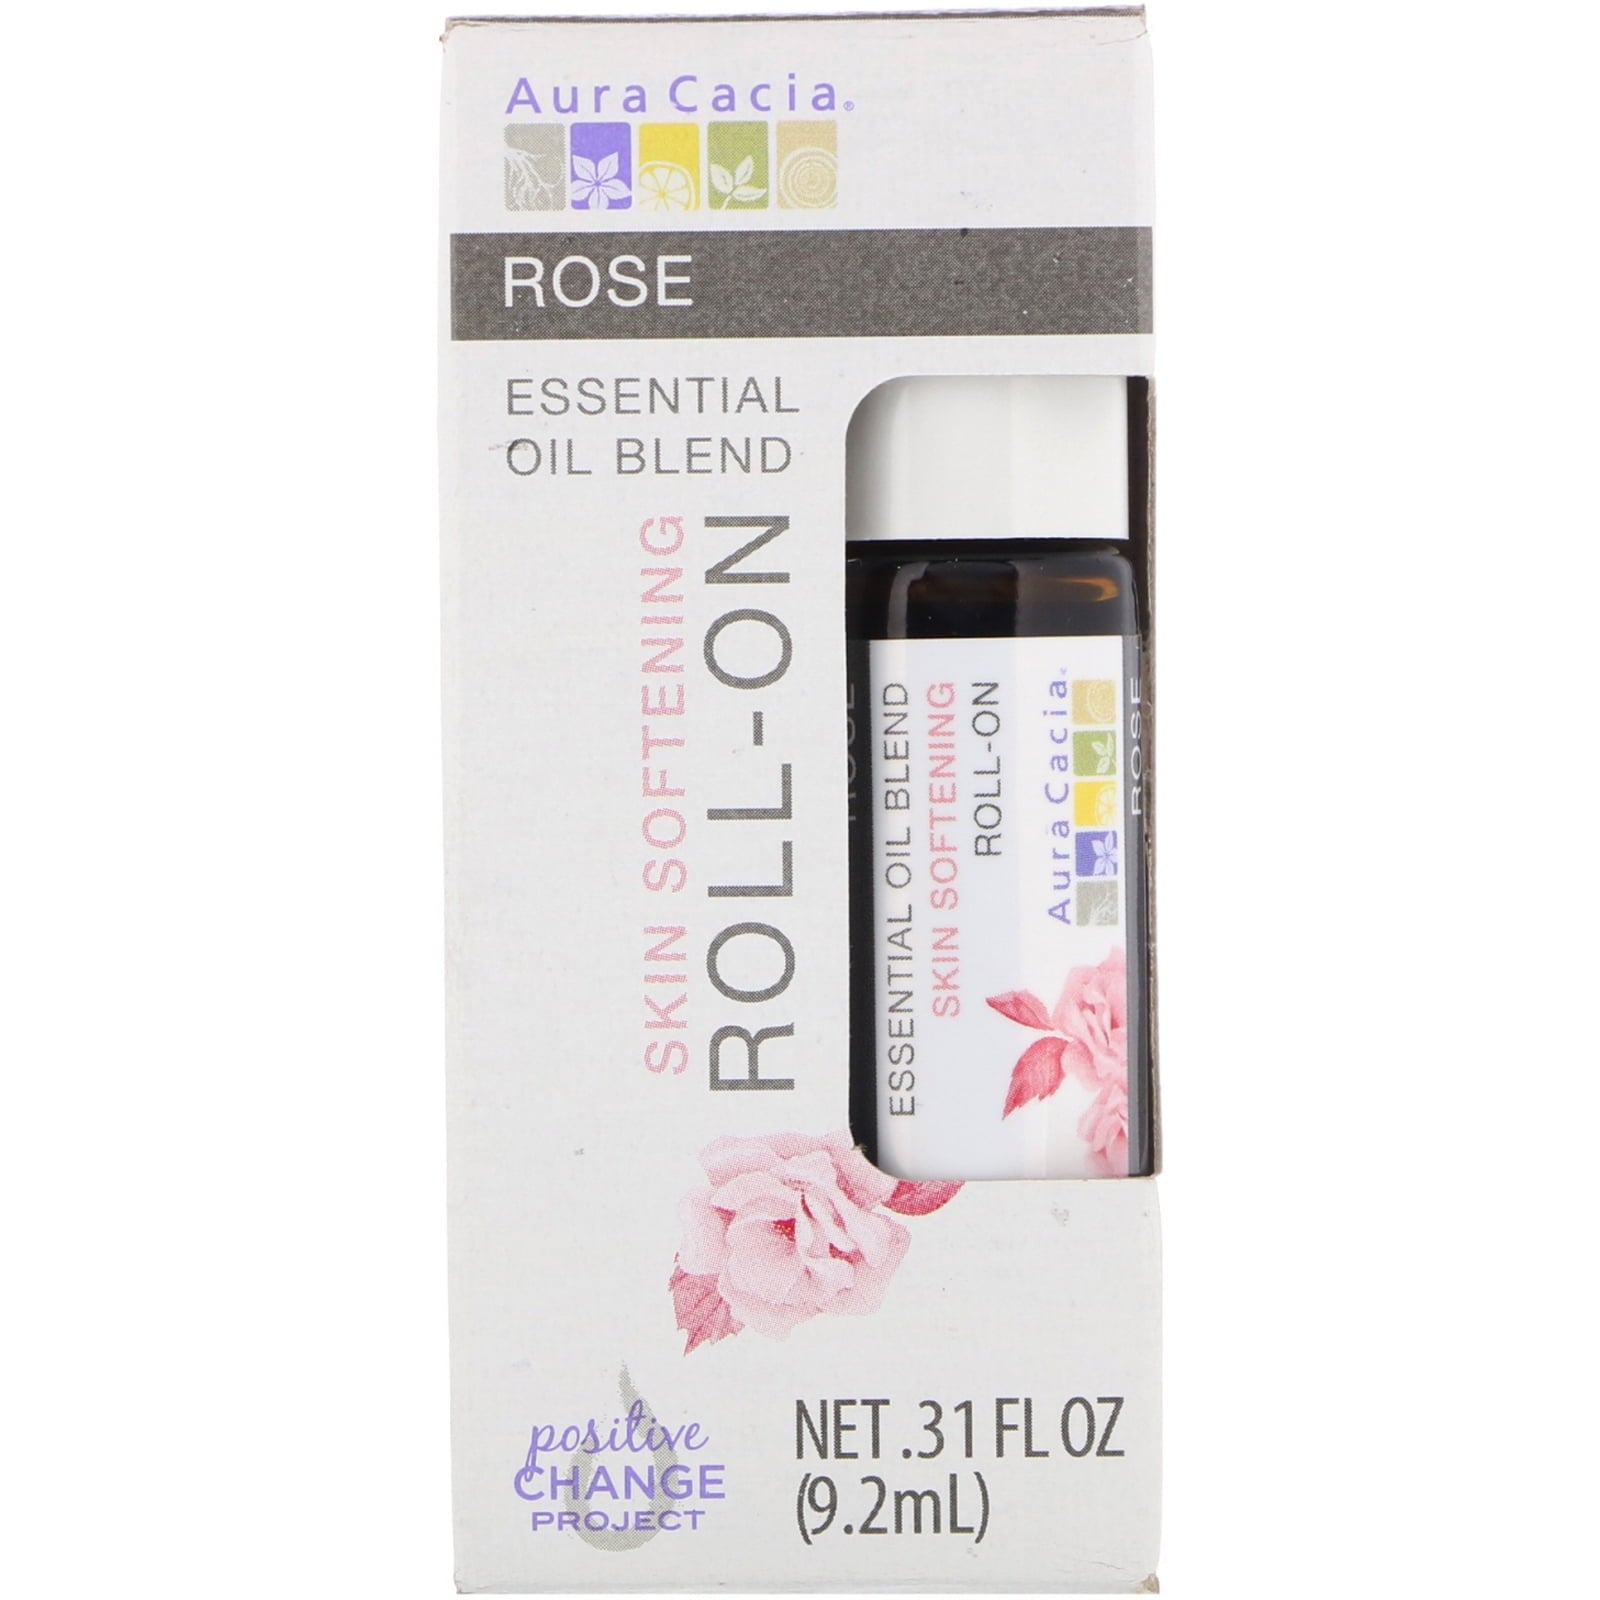 Aura Cacia Essential Oil Blend Skin Softening Roll-on Rose 0.31 oz Bottle